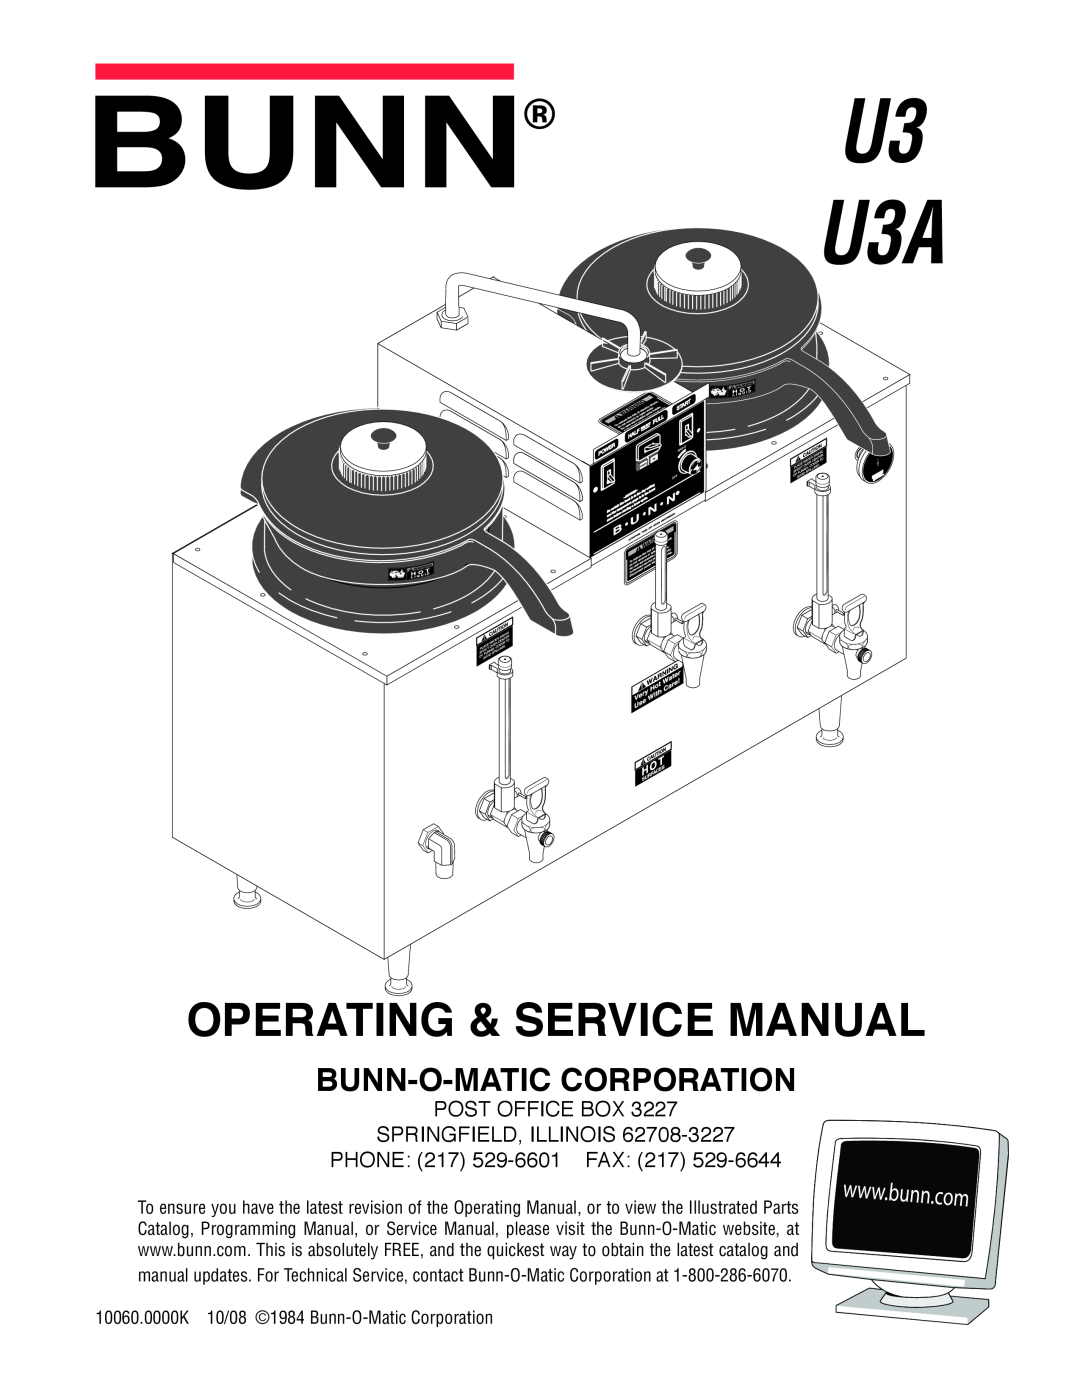 Bunn service manual U3 U3A, Operating & Service Manual, Bunn-O-Matic Corporation 